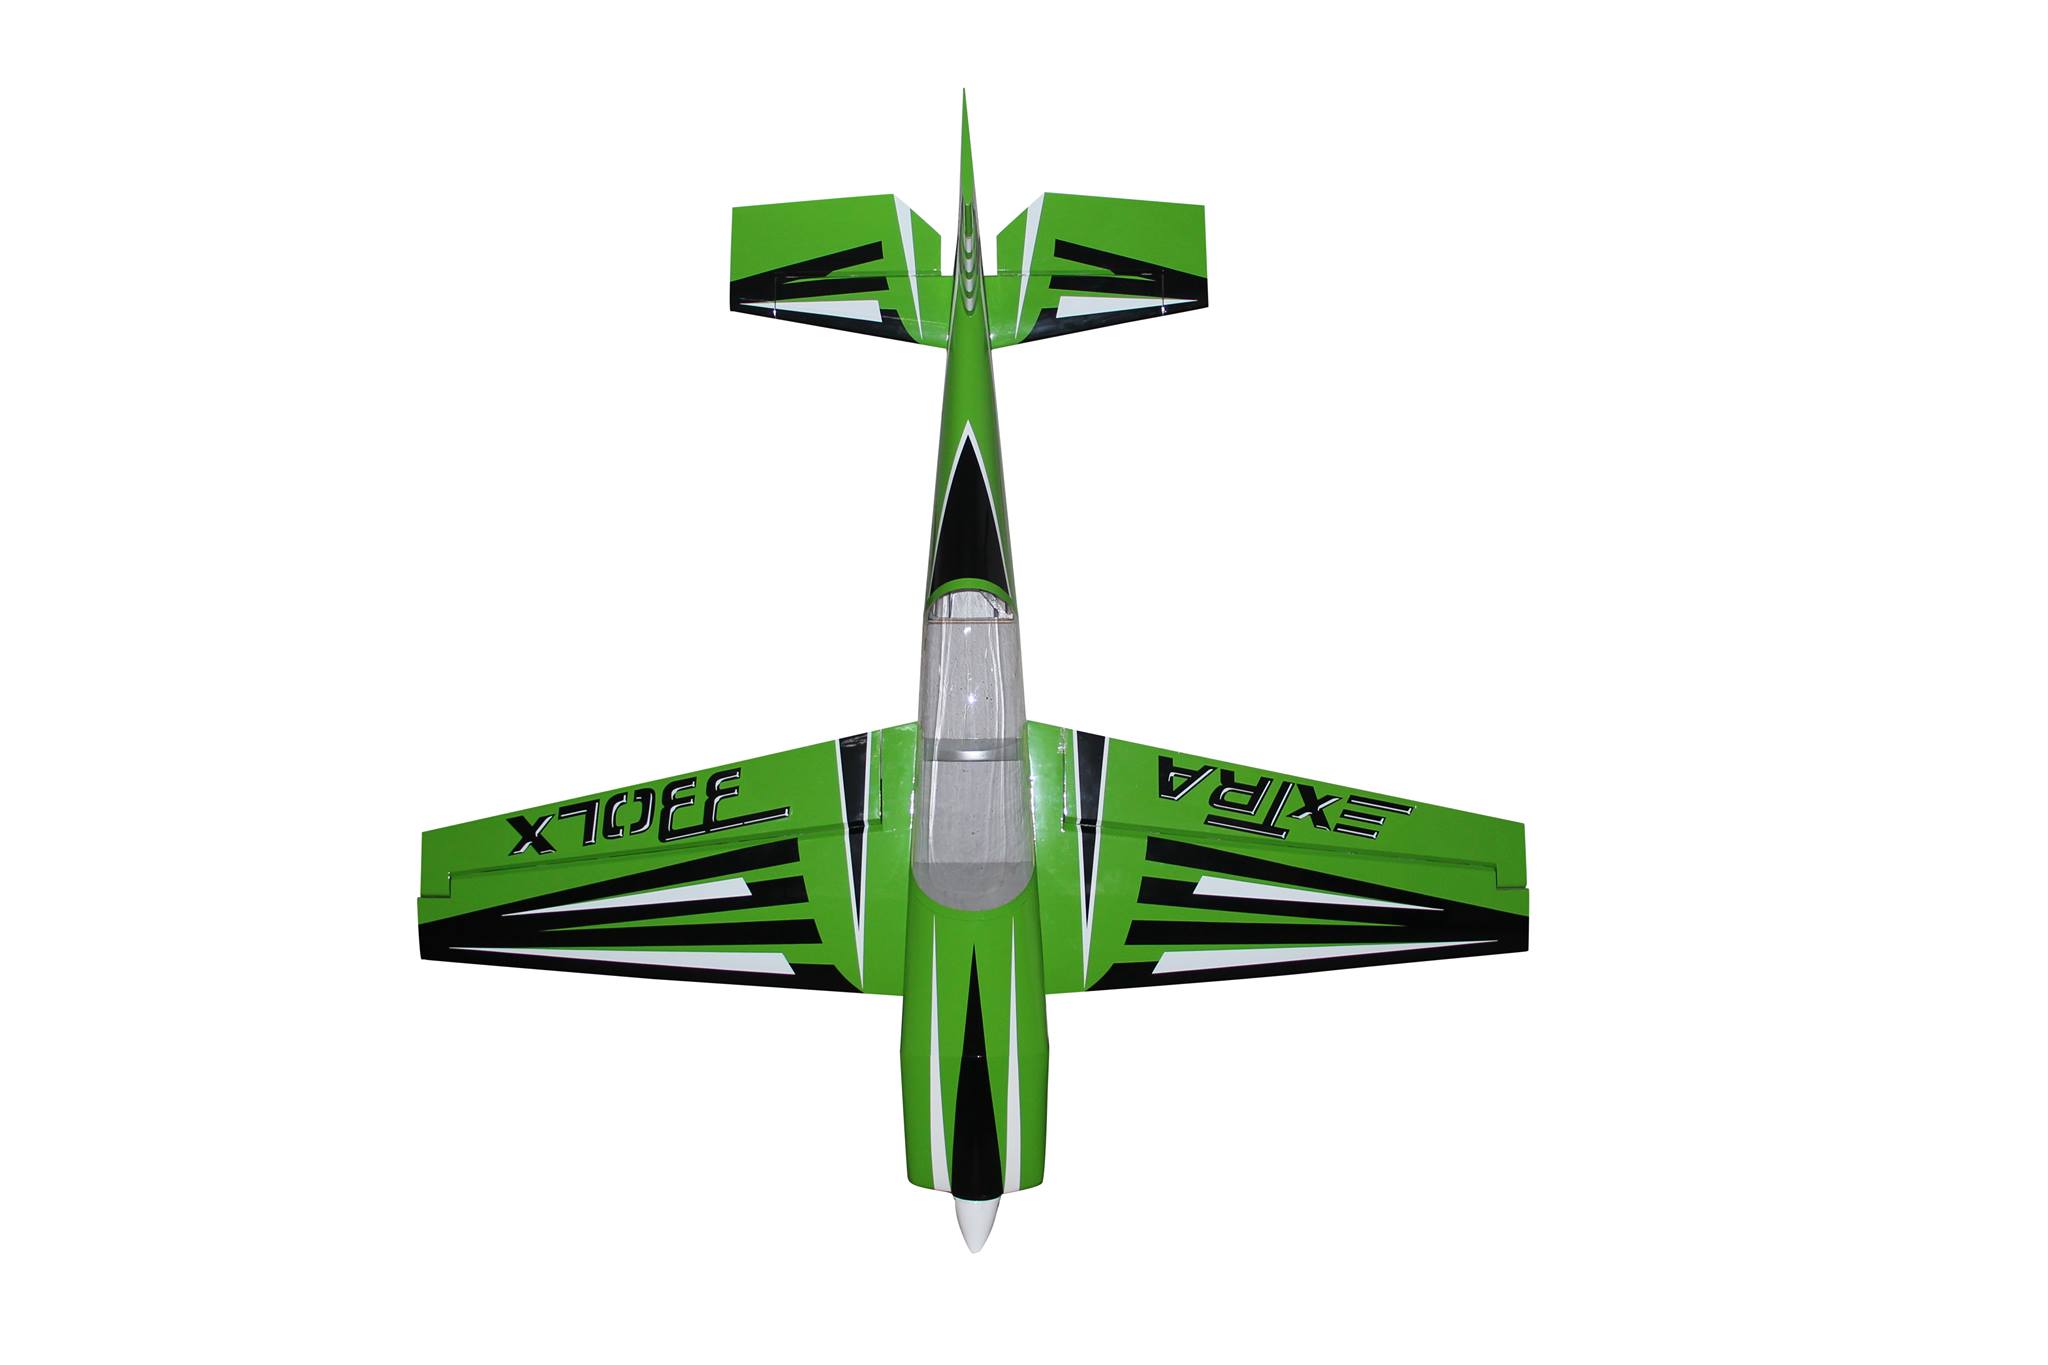 Extra 330 LX Pilot RC